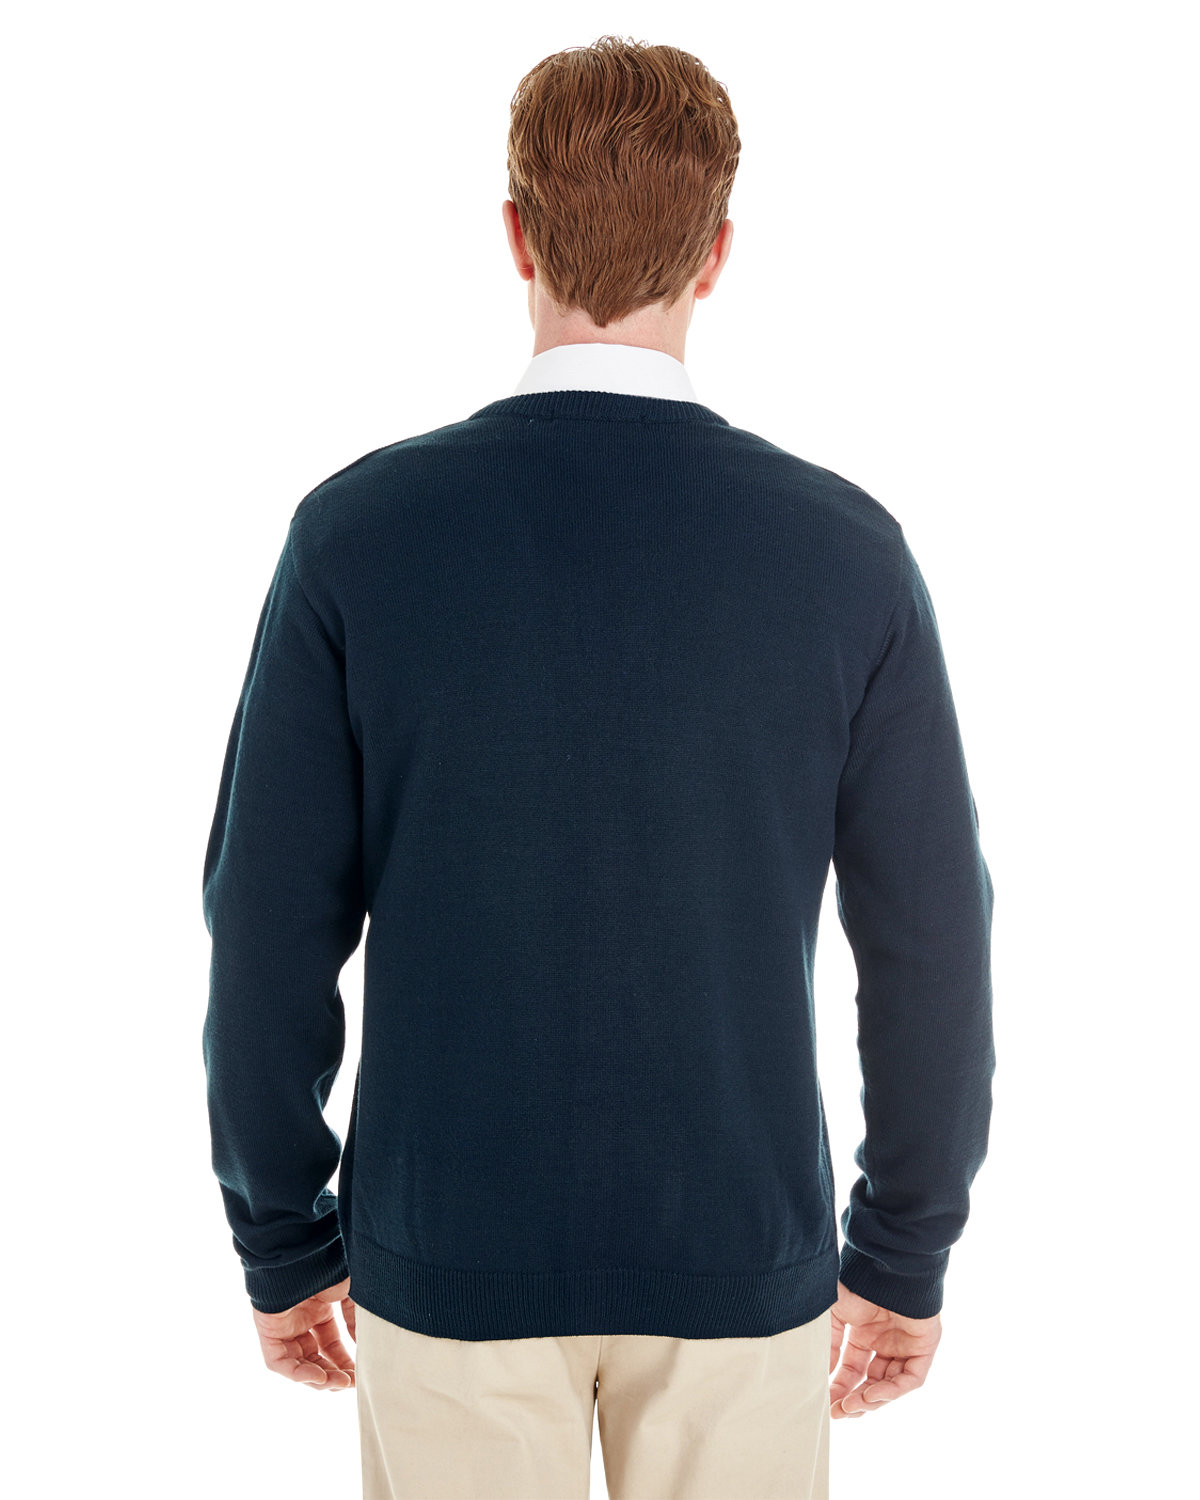 Harriton Men/'s Pilbloc V-Neck Button Cardigan Sweater